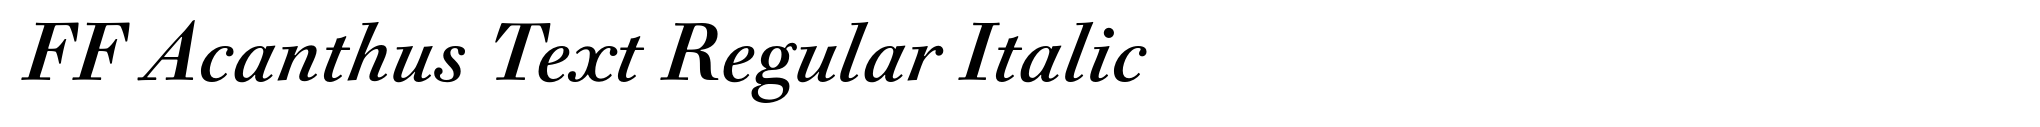 FF Acanthus Text Regular Italic image